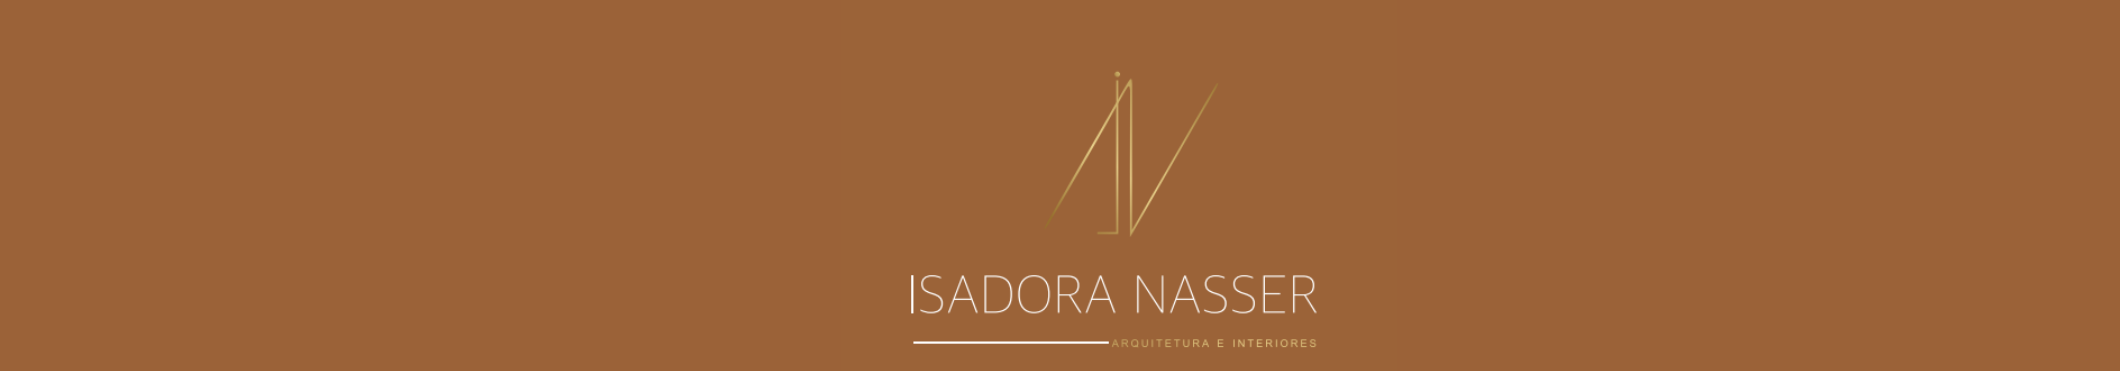 Bannière de profil de Isadora Nasser